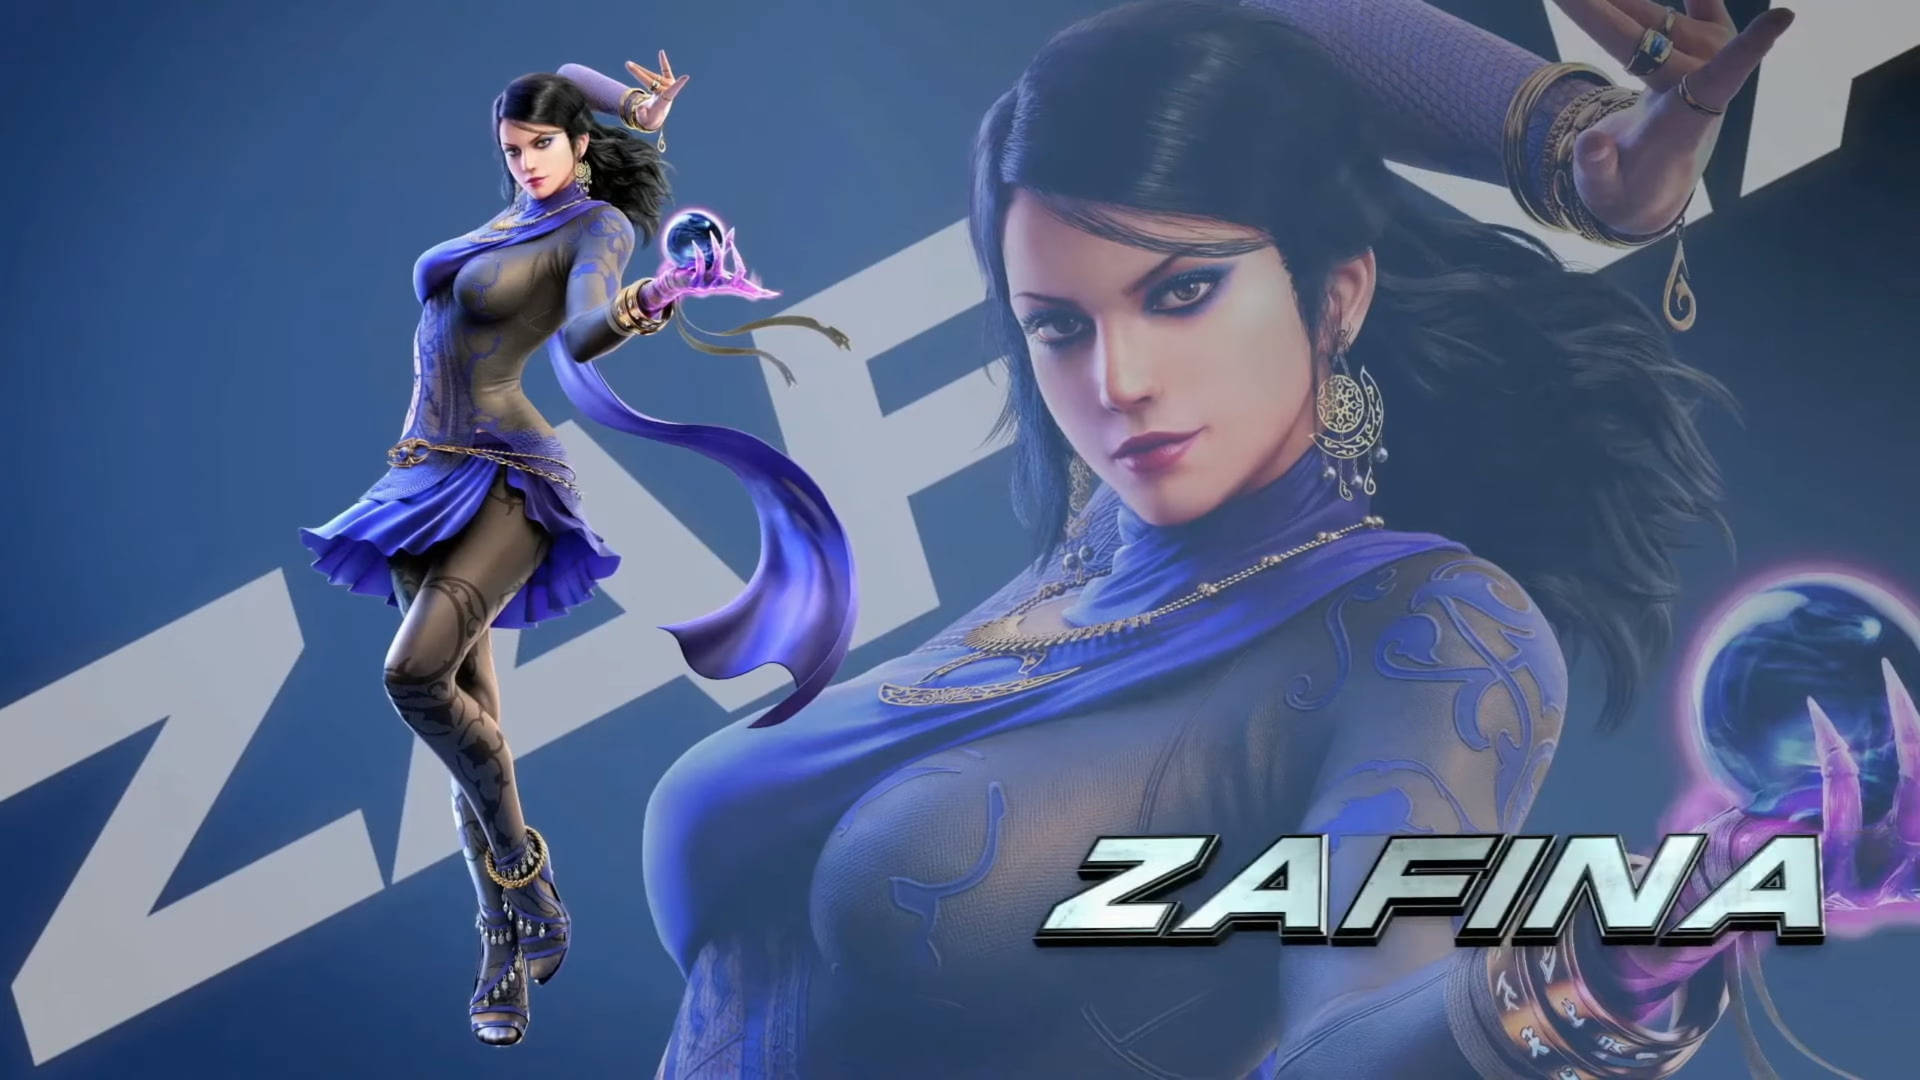 Tekken Zafina Digital Cover Background